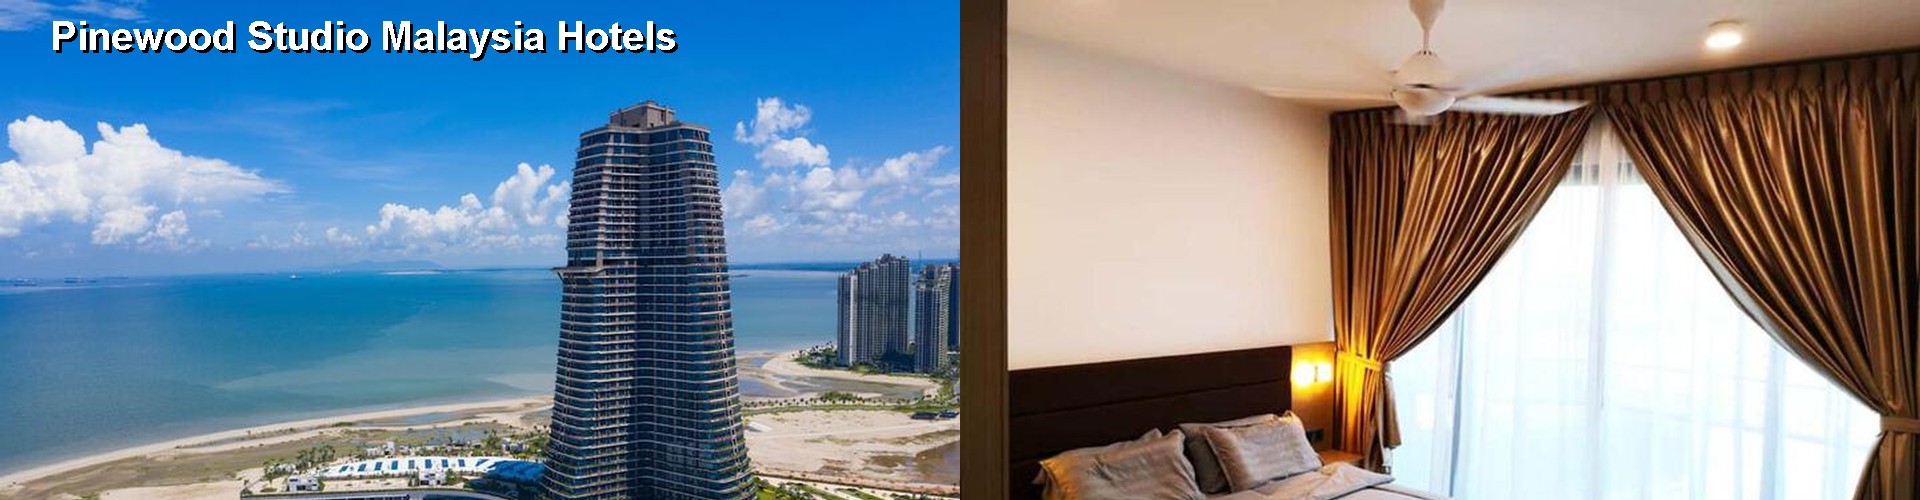 4 Best Hotels near Pinewood Studio Malaysia